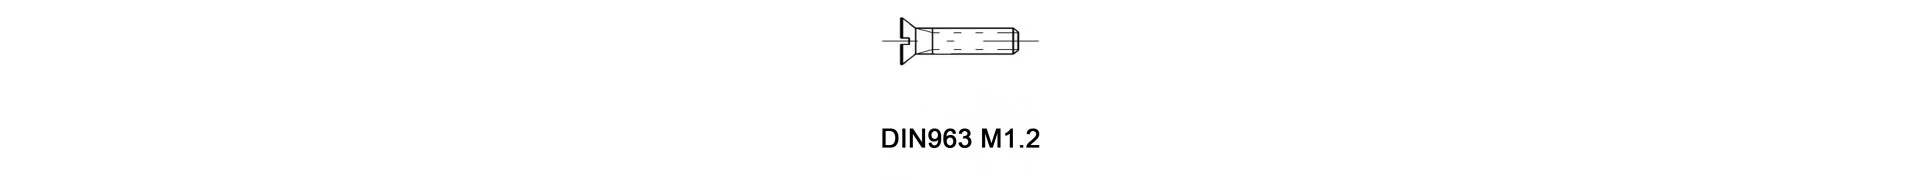 DIN963 M1.2